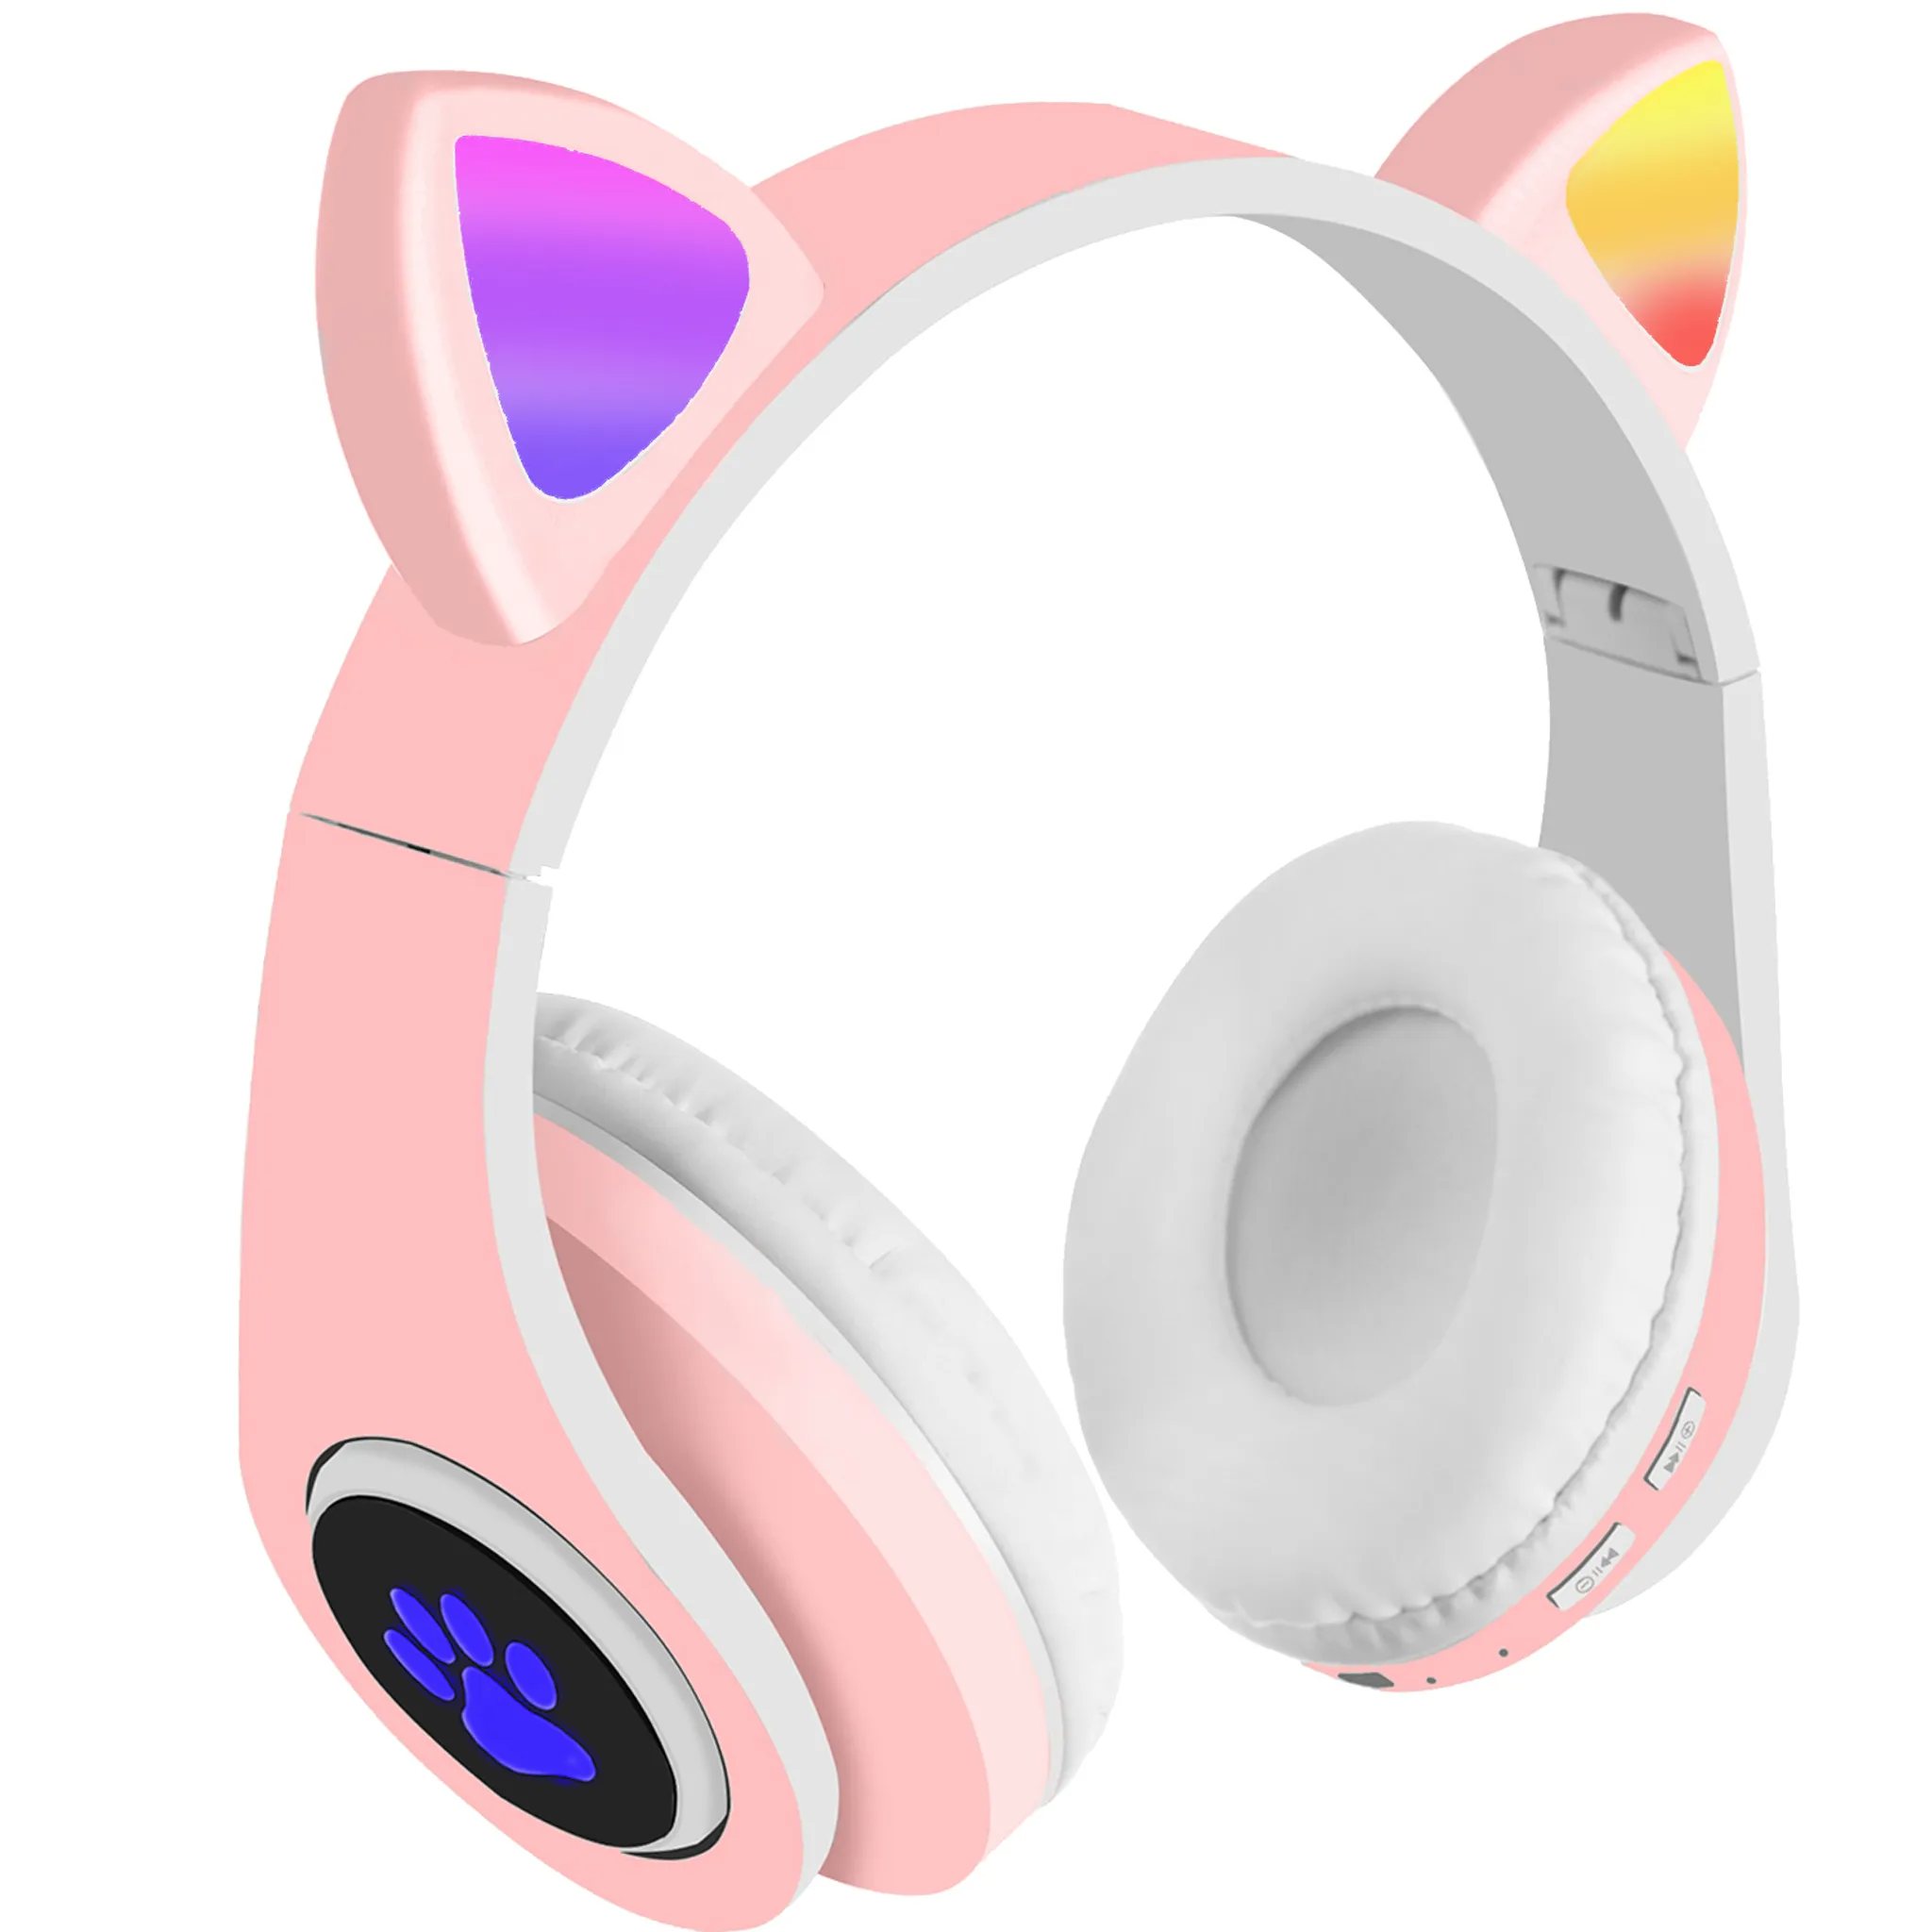 Casti audio bluetooth „Likesmart Cat Ears”, cu lumini LED RGB, Microfon incorporat, pliabile, cablu incarcare inclus, Roz